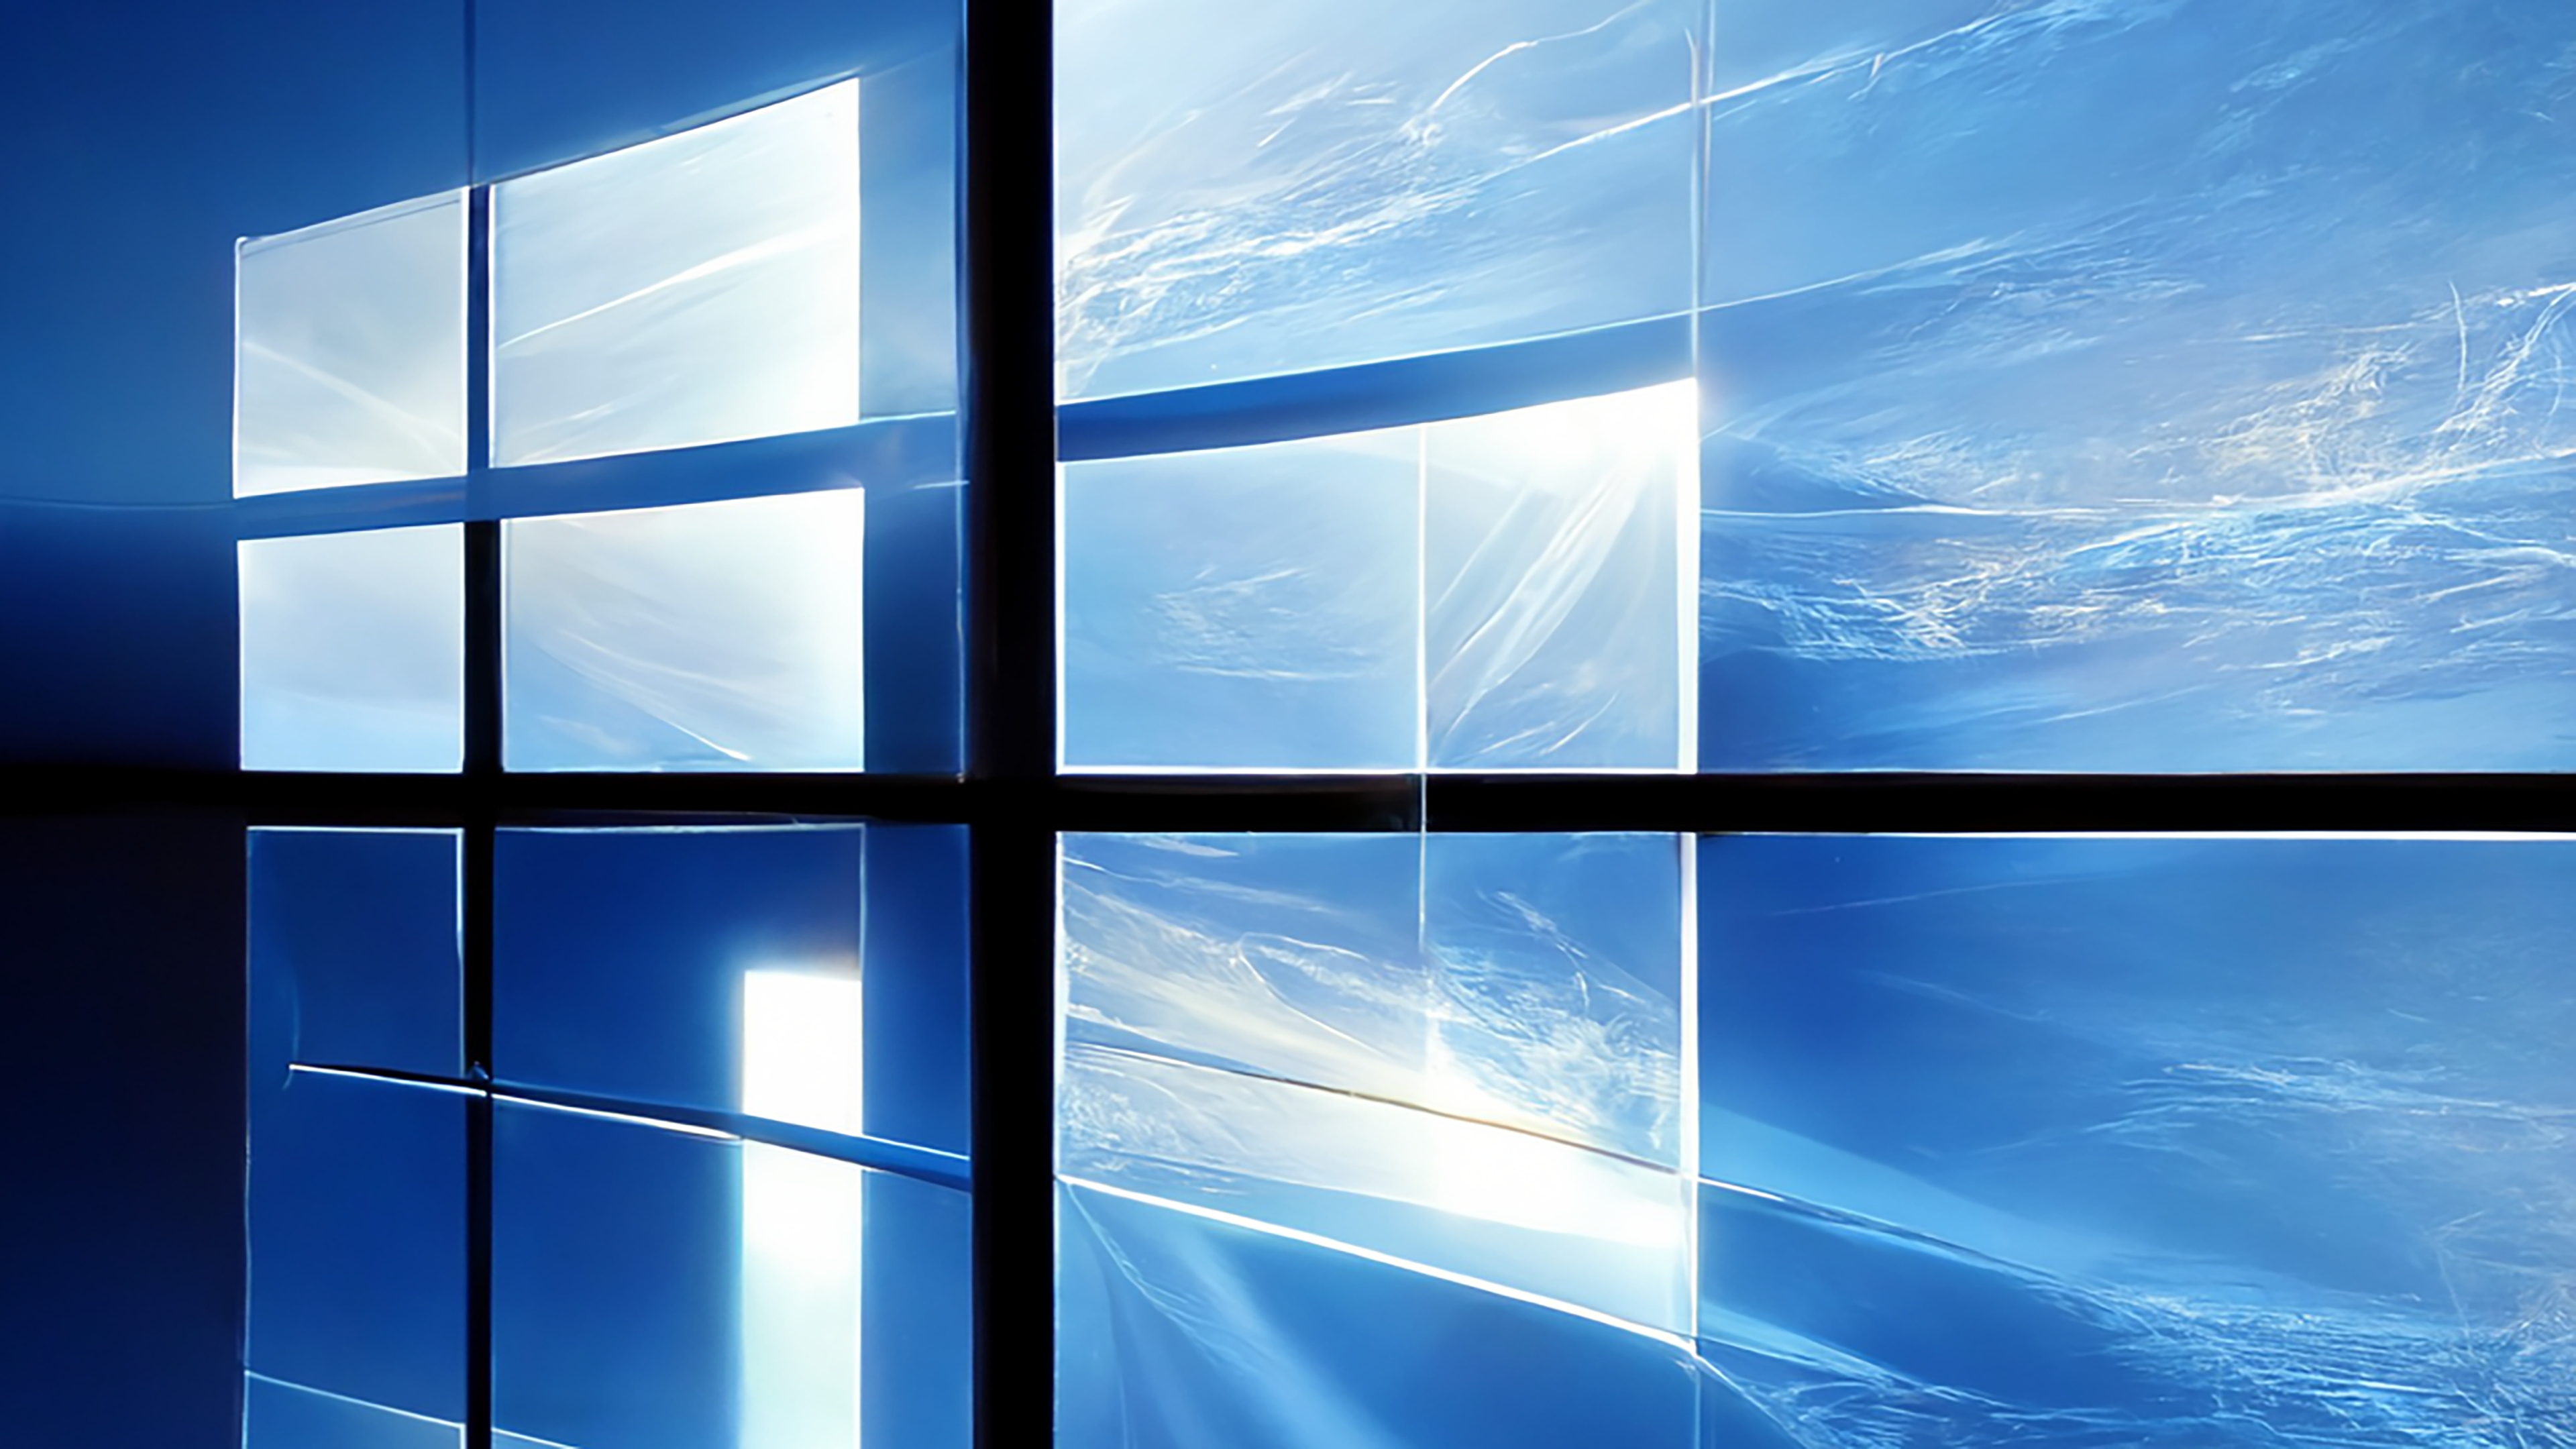 Windows 12 wallpaper created